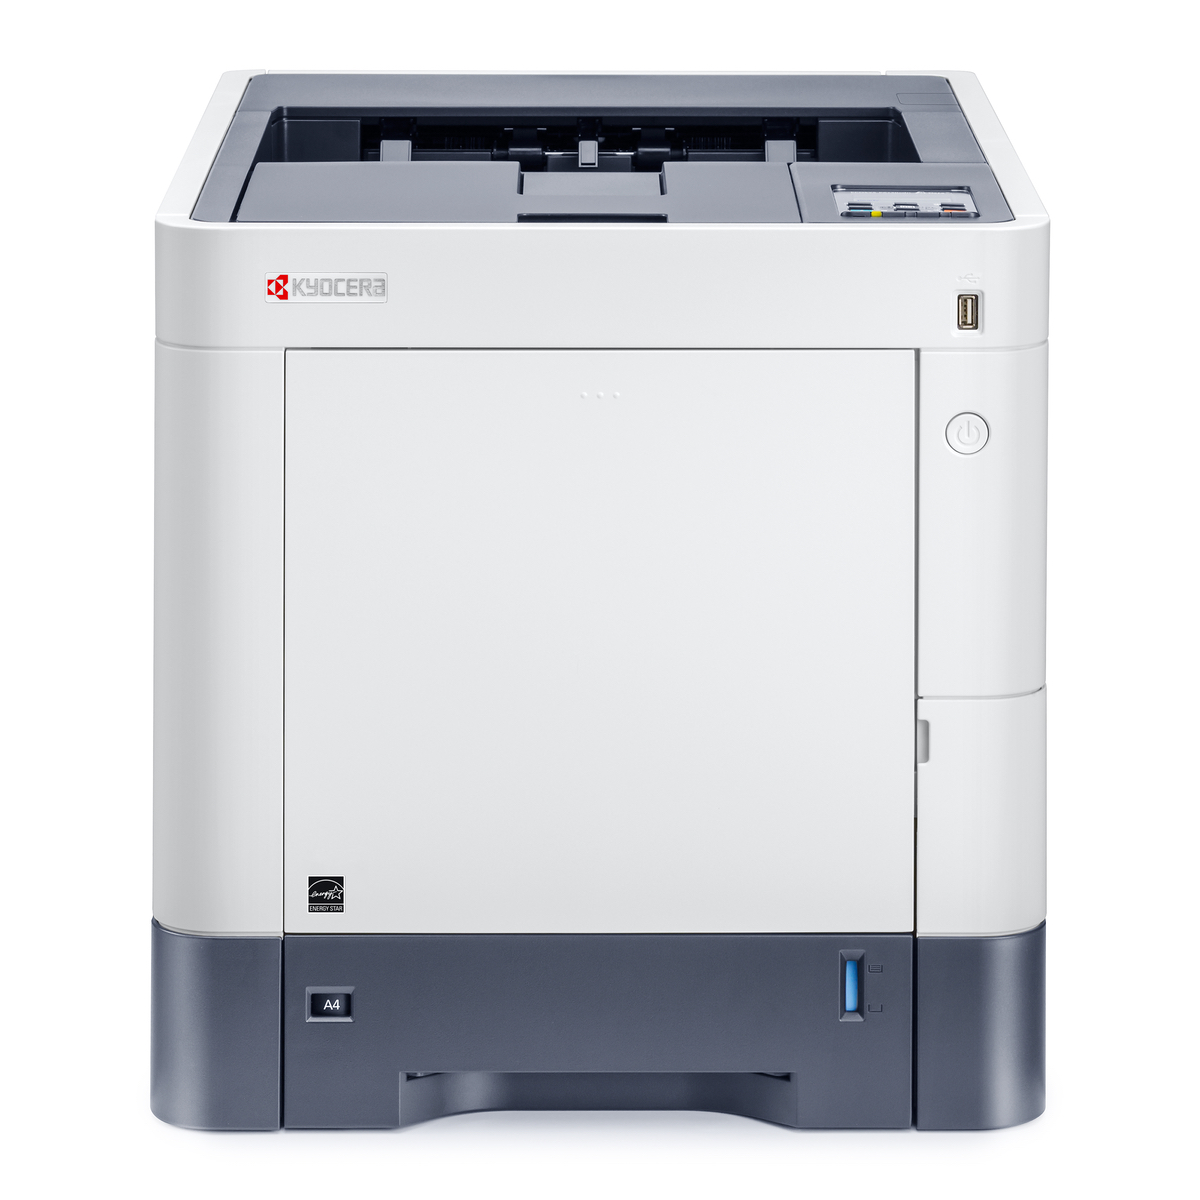 Kyocera Printers:  The Kyocera ECOSYS P6230cdn Printer